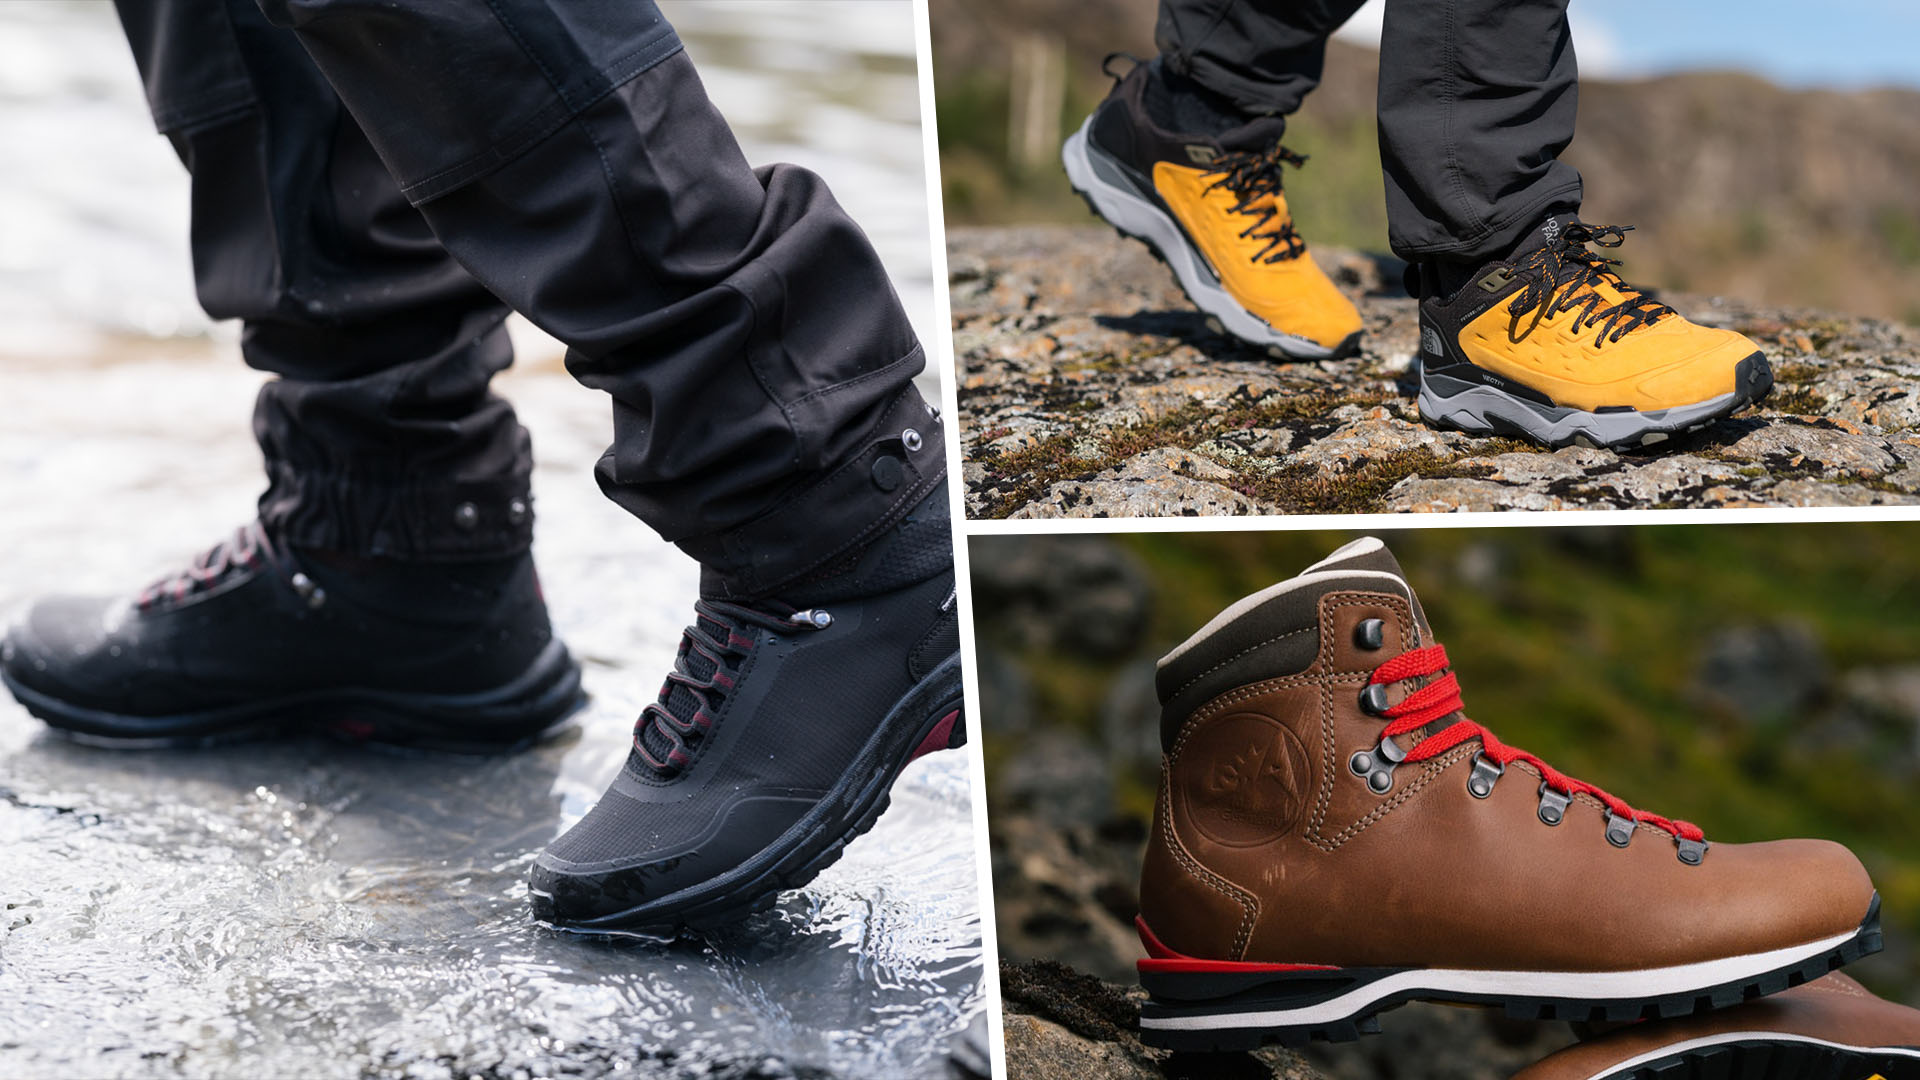 Waterproof shoes and waterproof boots: waterproof outdoor shoes – Page 2 –  Halti Global Store